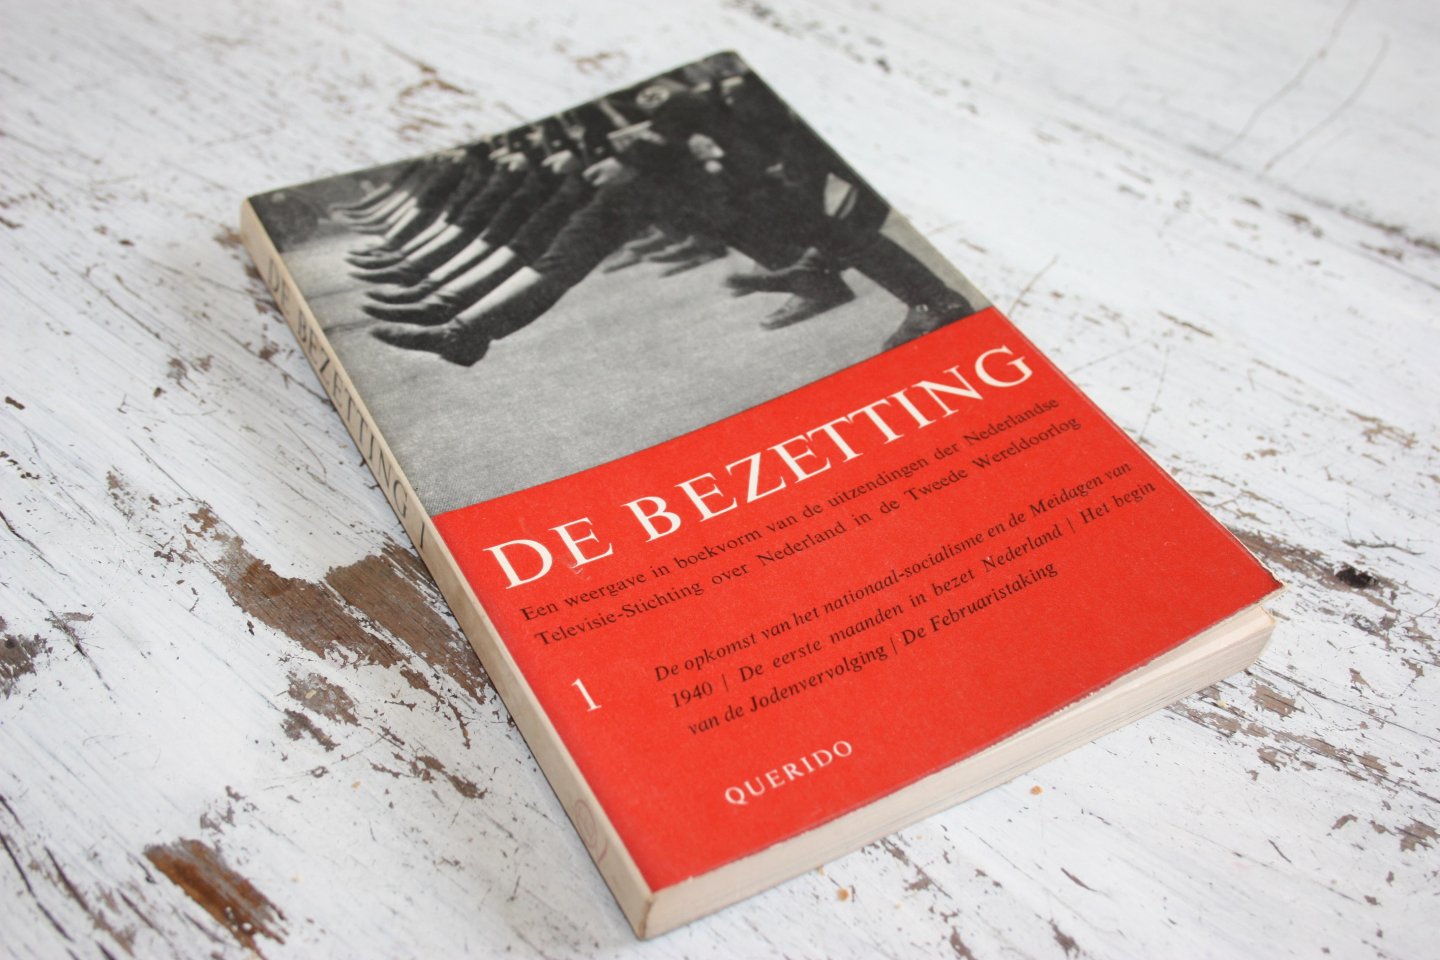 Jong, dr. L. de - BEZETTING , DE / 5 delen